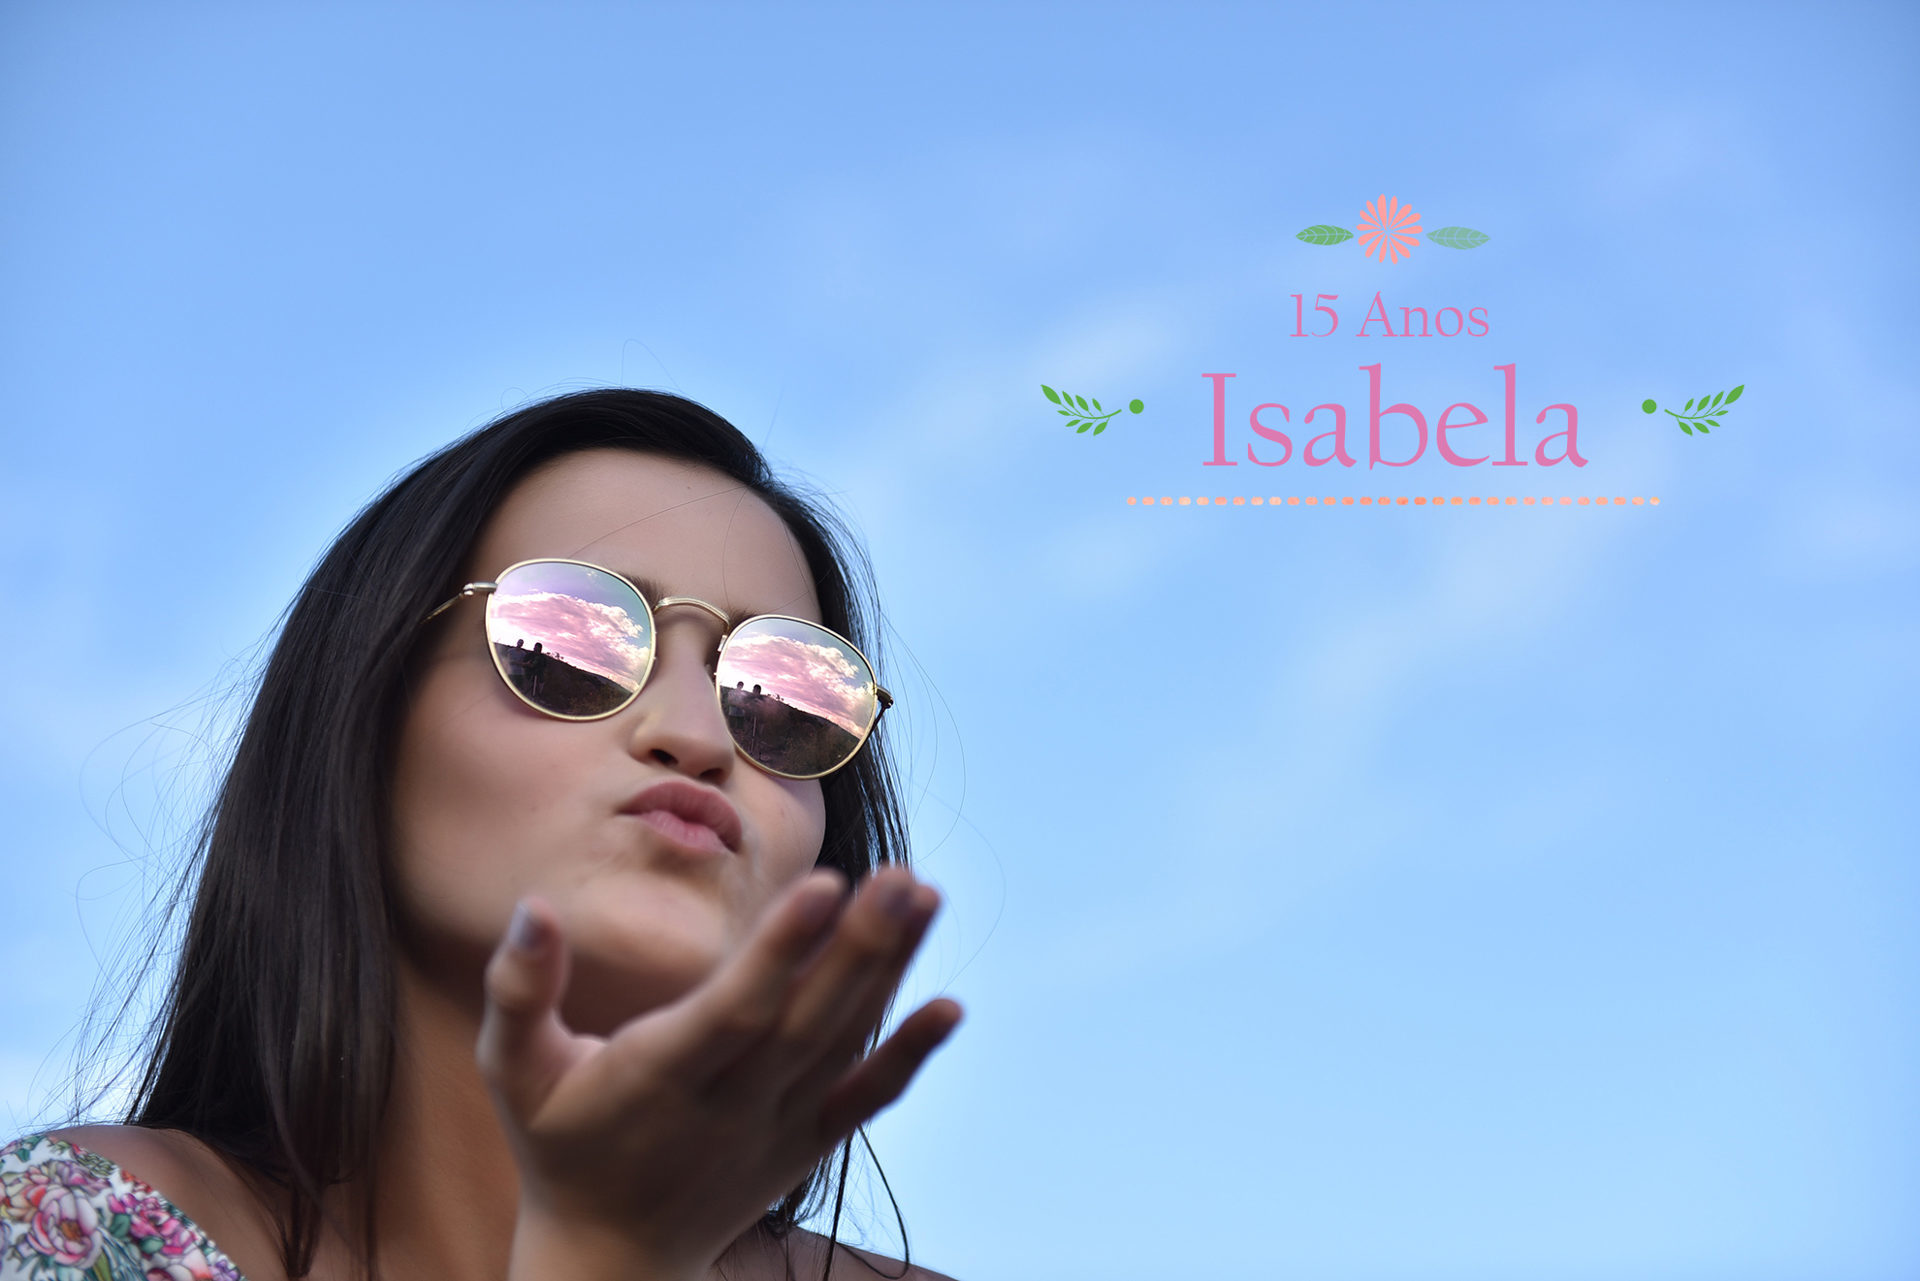 Isabela - Book 15 Anos